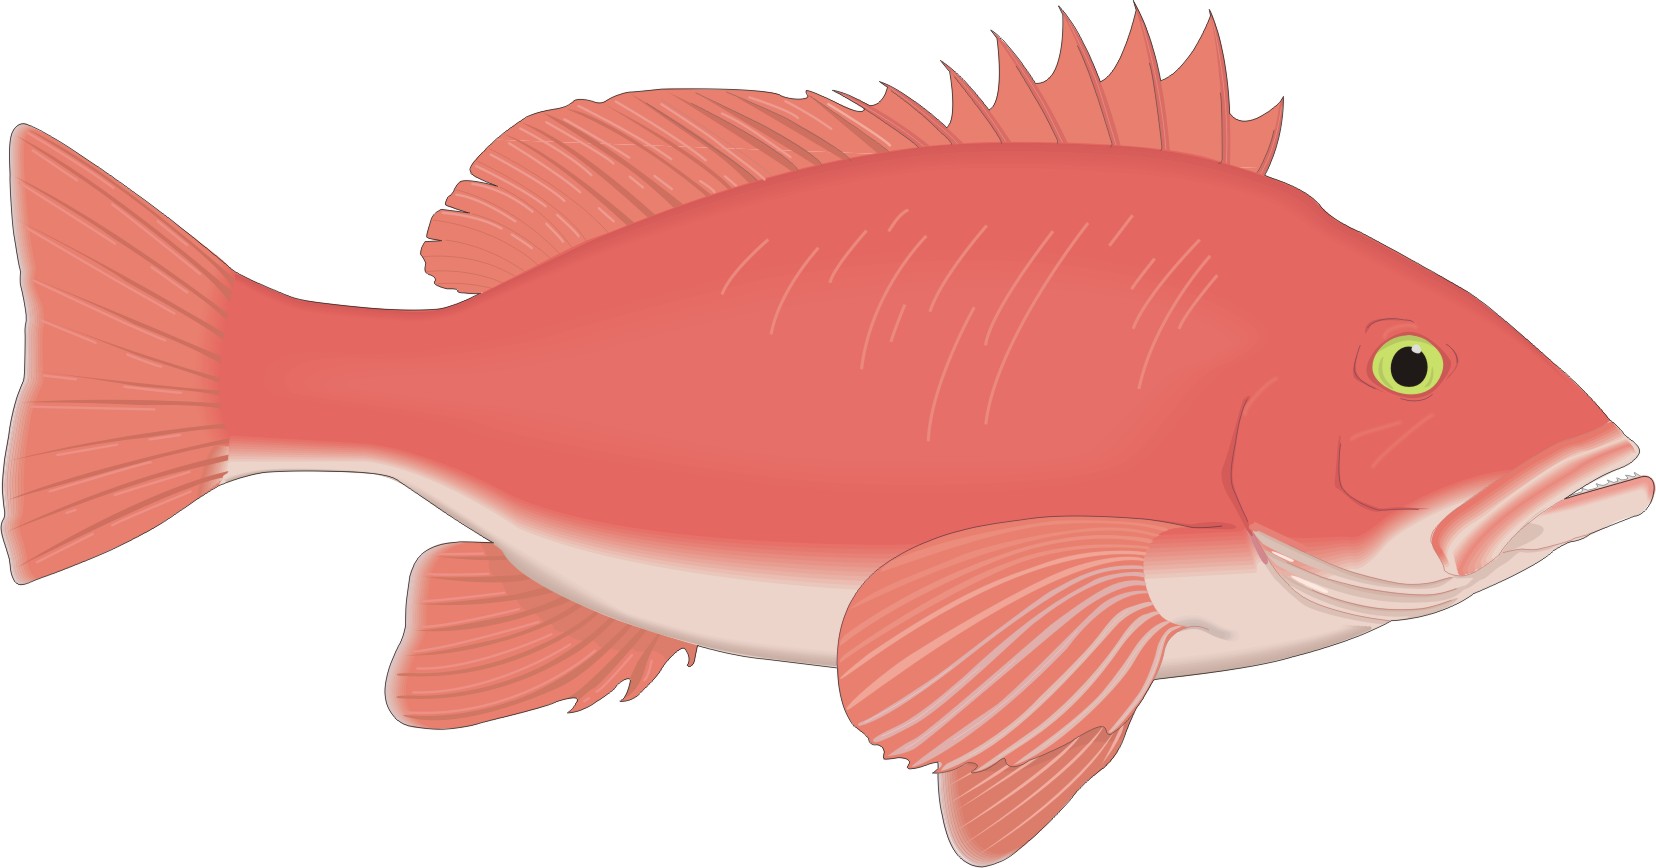 Red Fish Cartoon - ClipArt Best